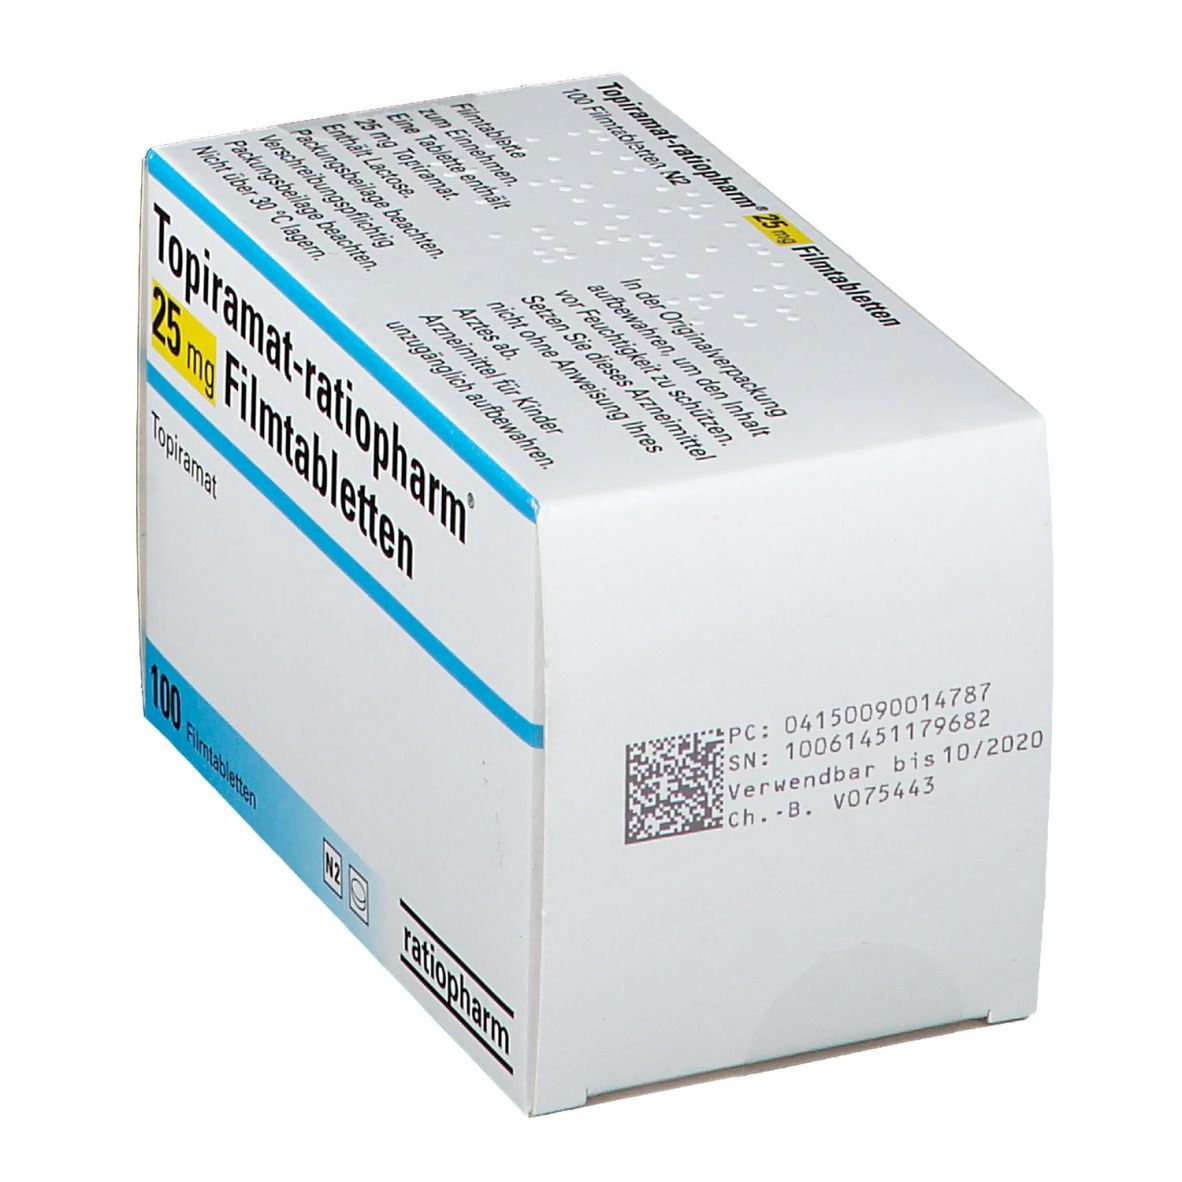 Topiramat-ratiopharm® 25 mg